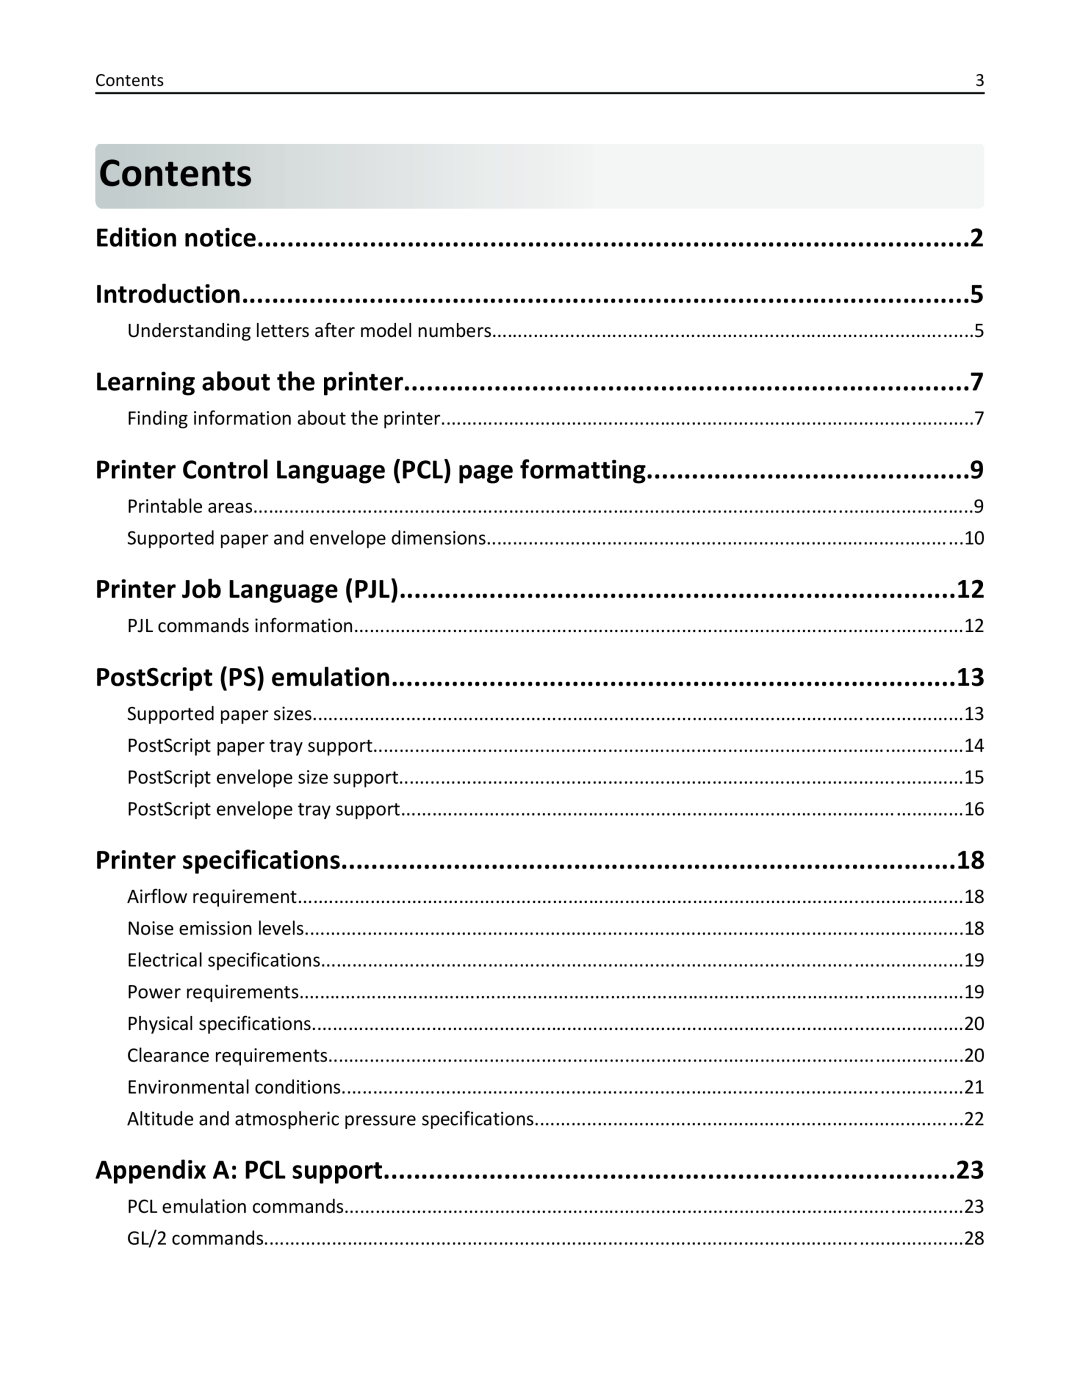 Lexmark 954DHE, 952DE, 950DE Contents, Edition notice, Introduction, Learning about the printer, Printer Job Language PJL 